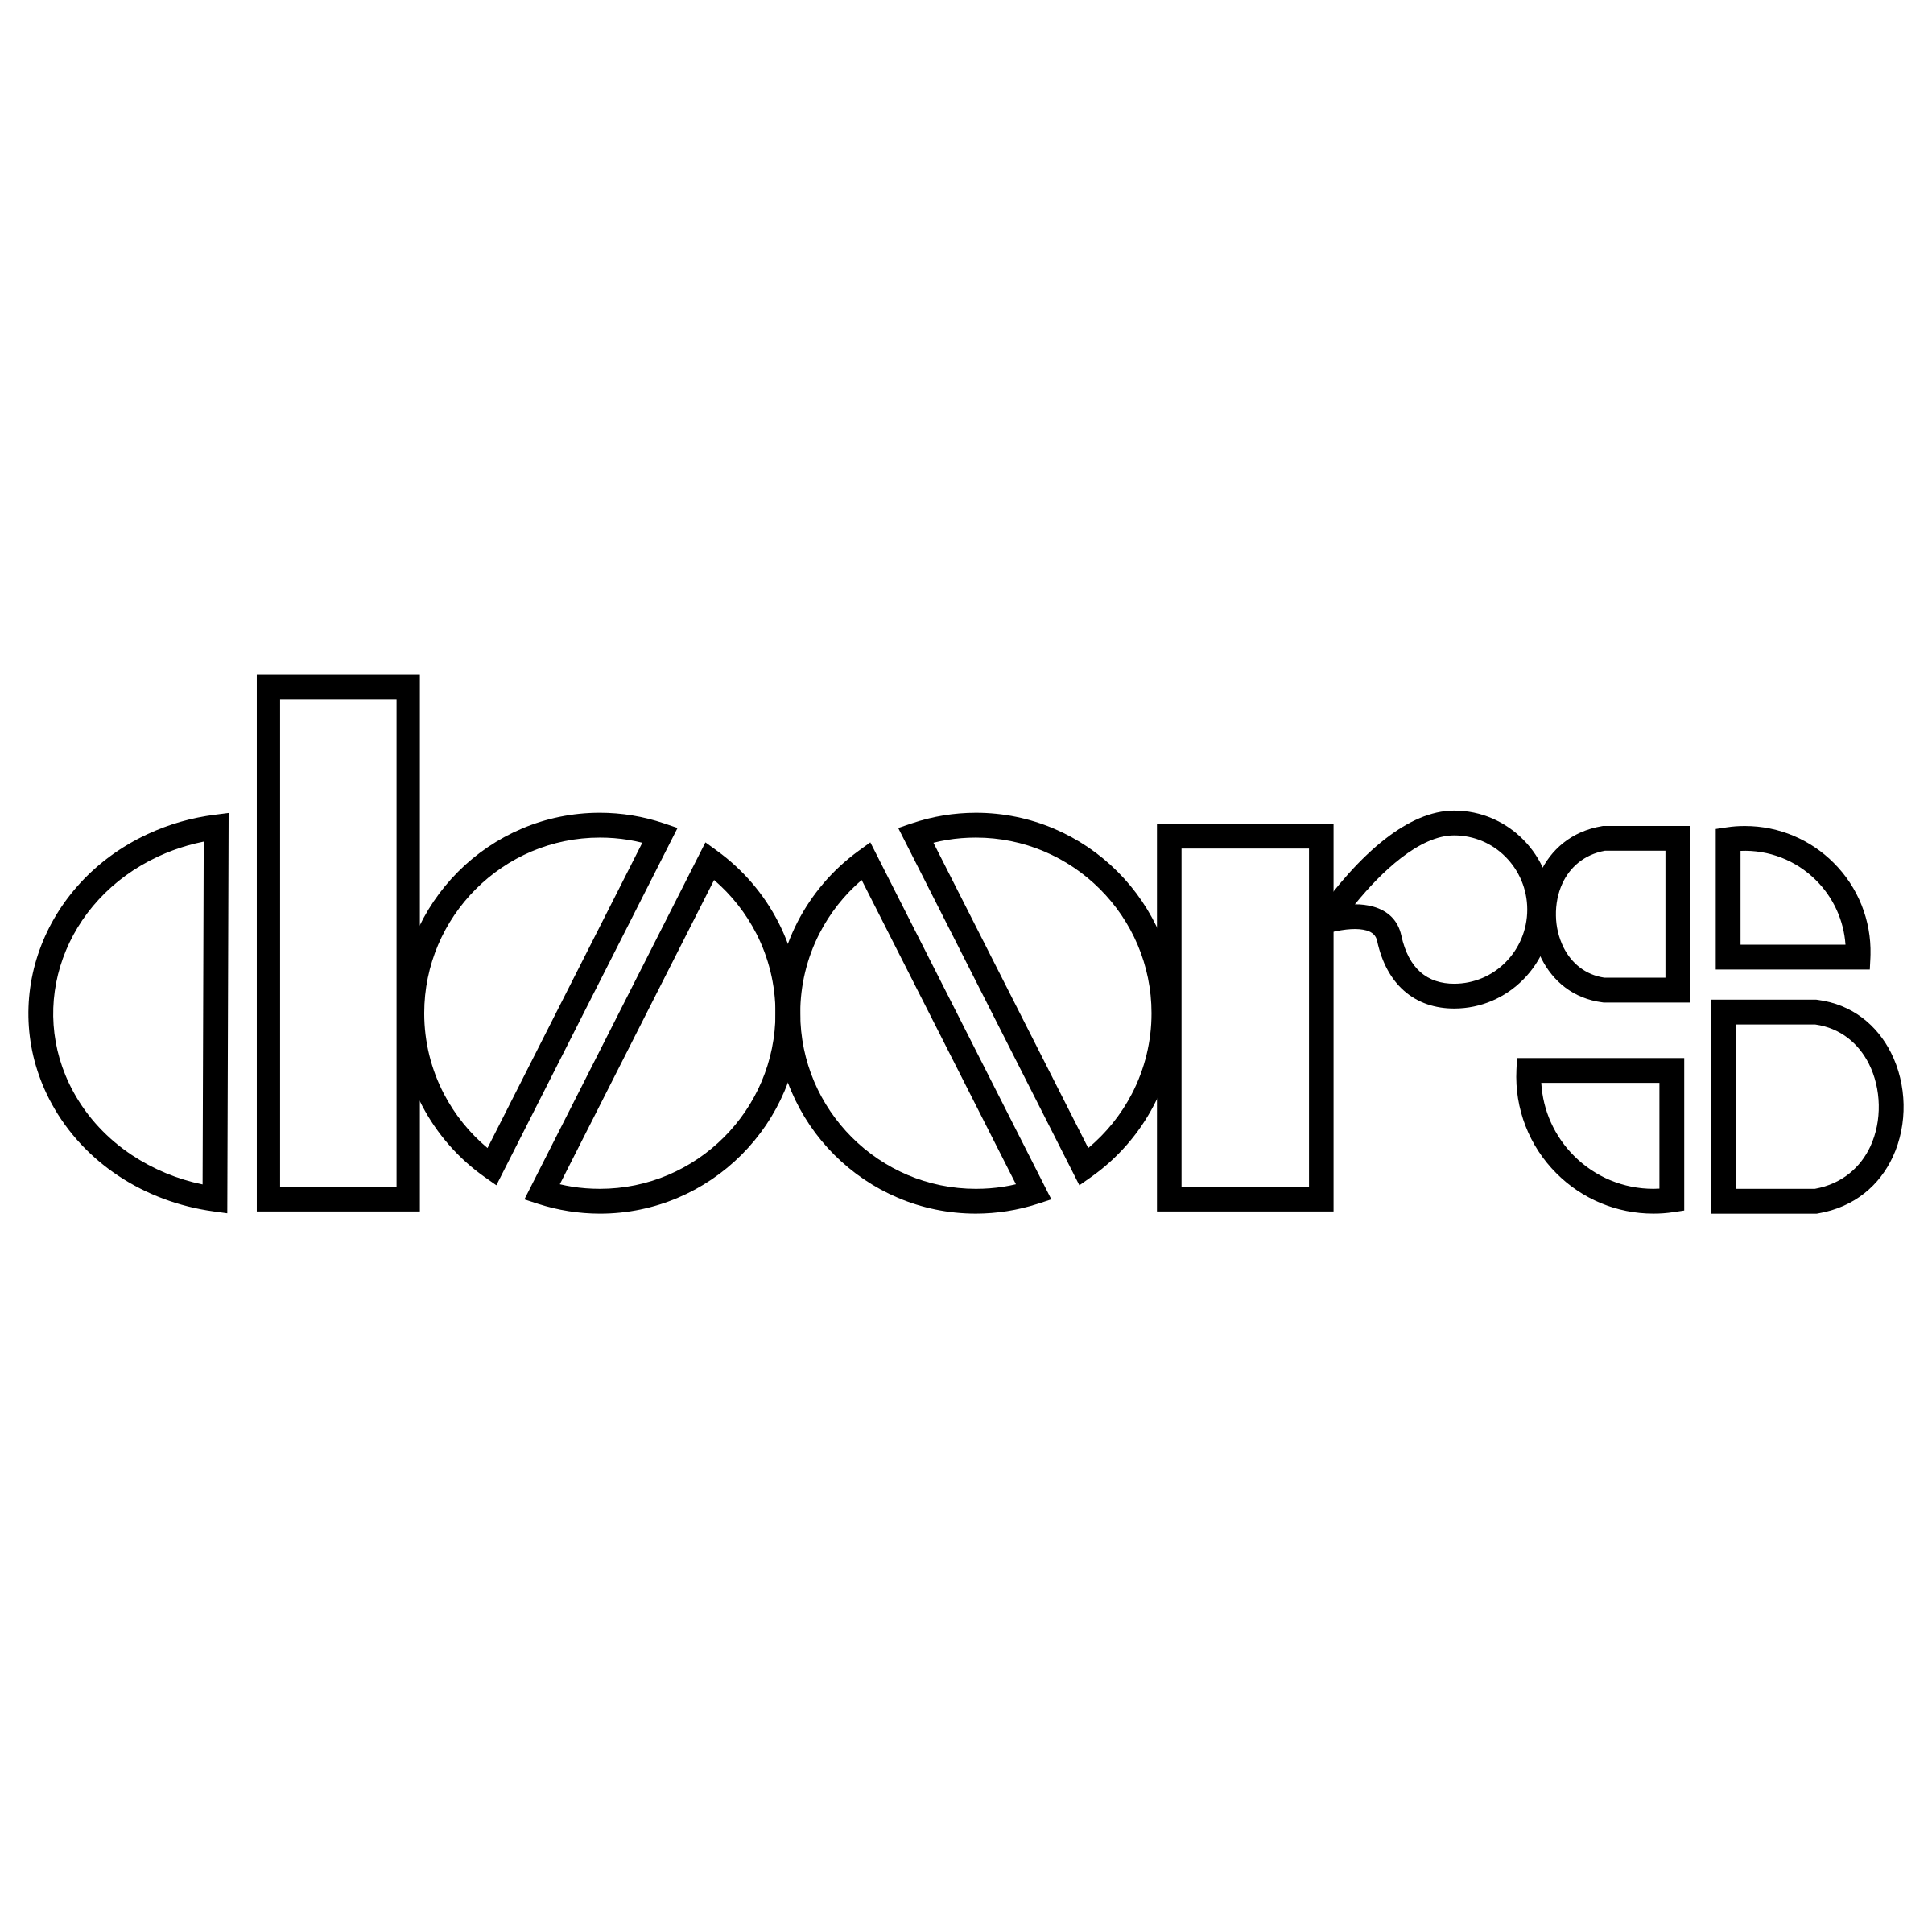 The Doors Logo - Doors Logo PNG Transparent & SVG Vector - Freebie Supply